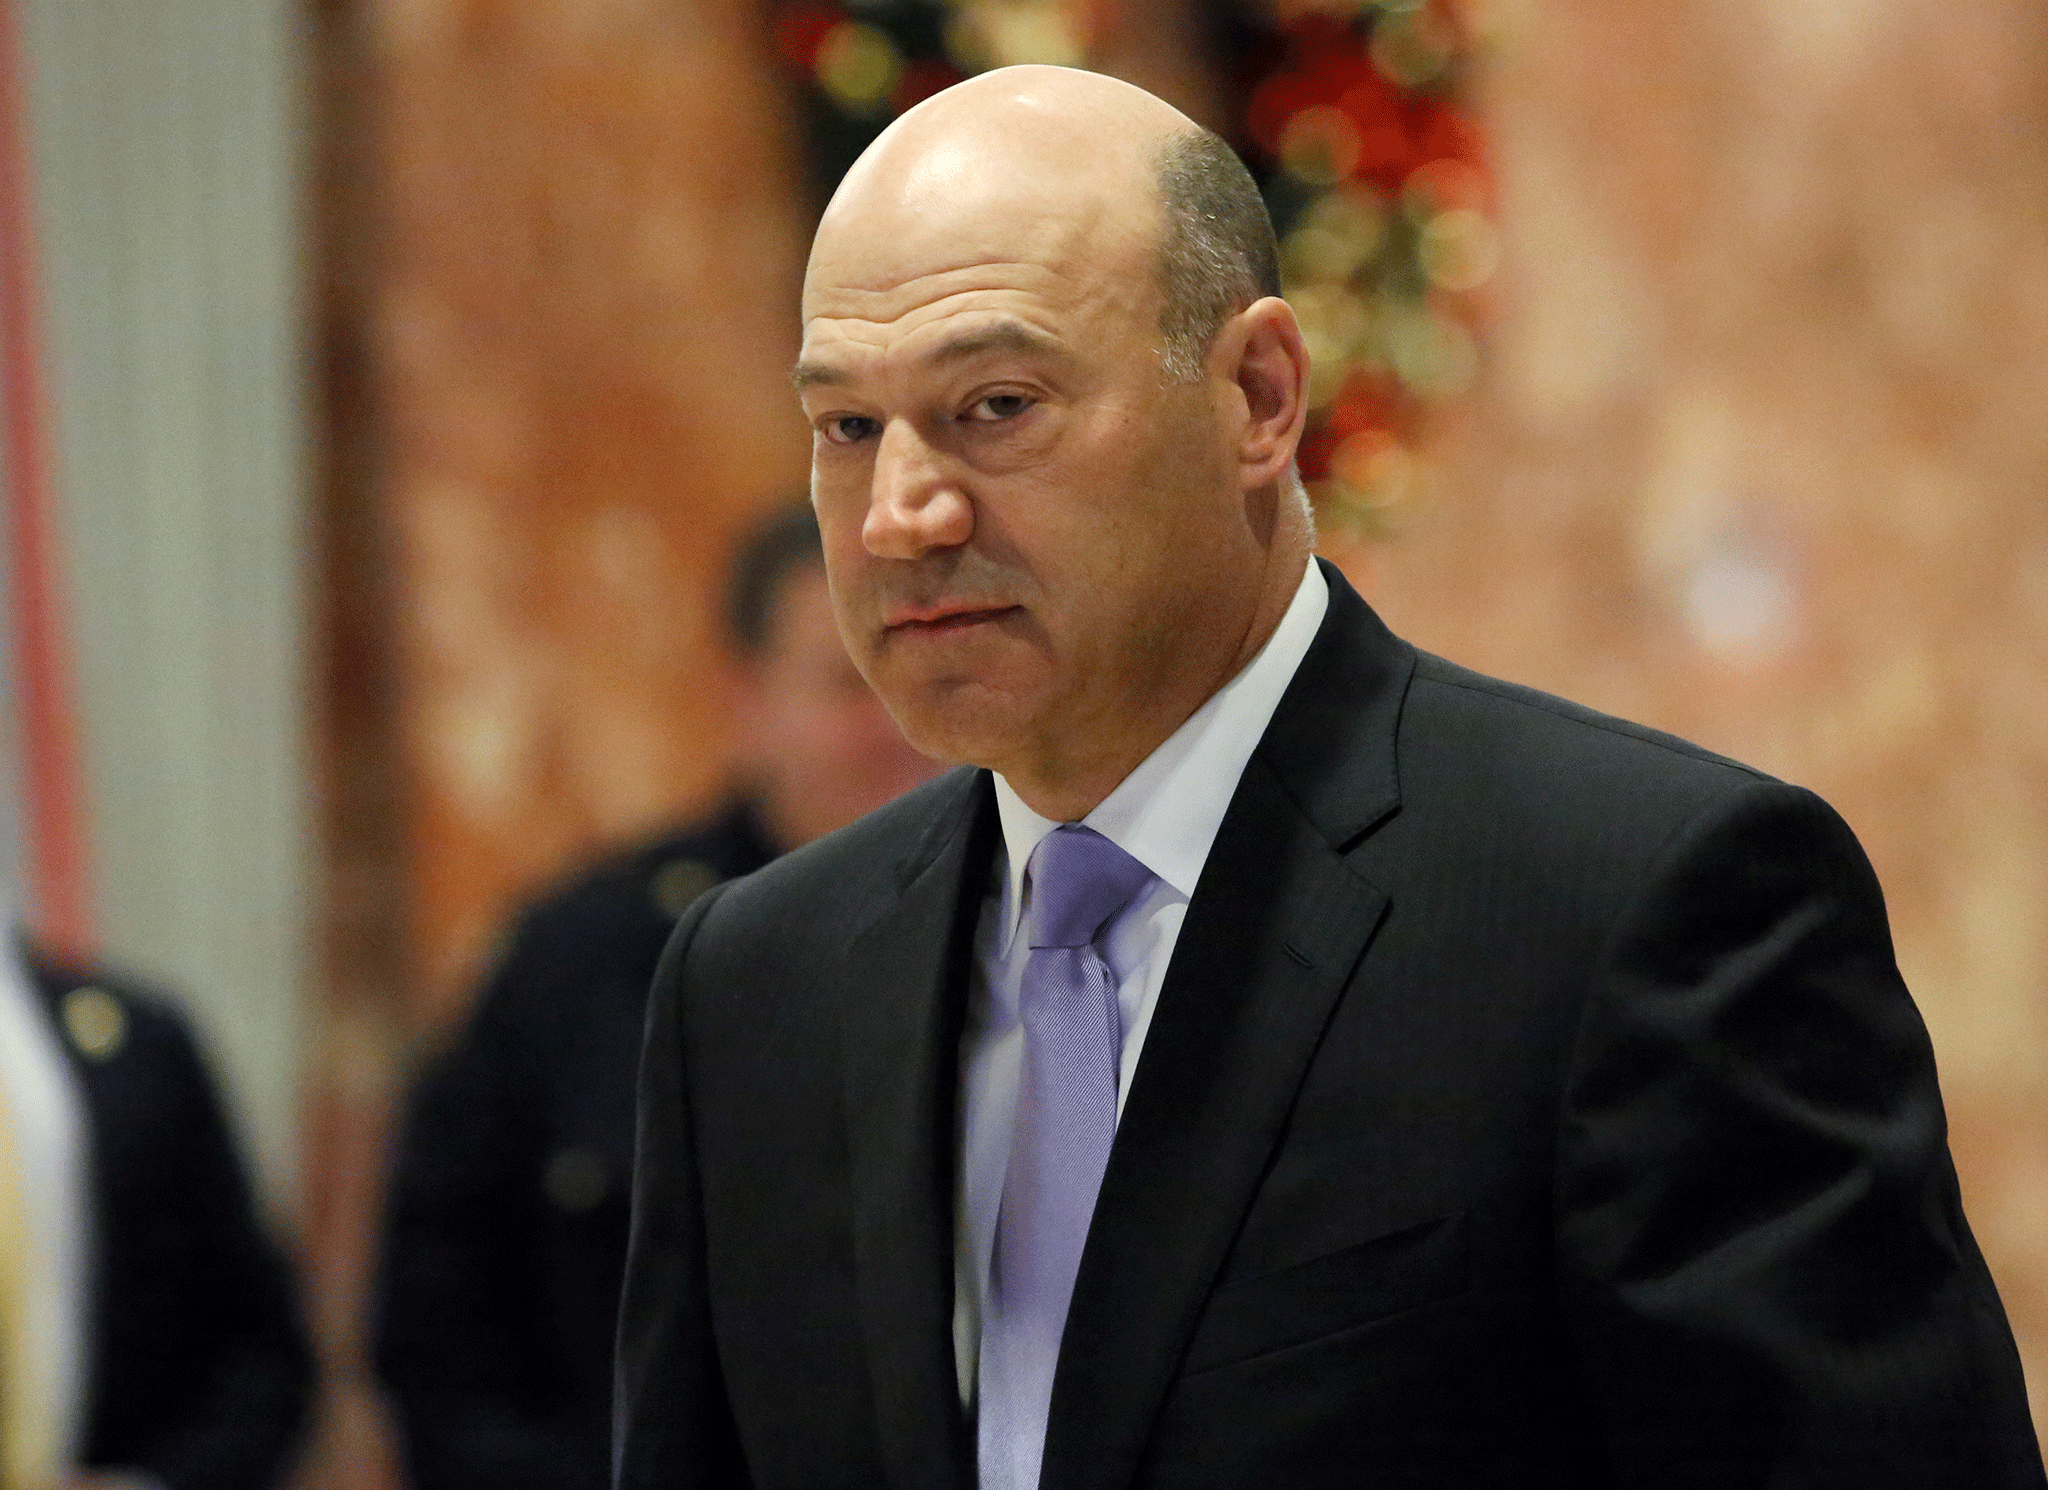 Former Goldman Sachs president Gary Cohn will head up the President's economic council